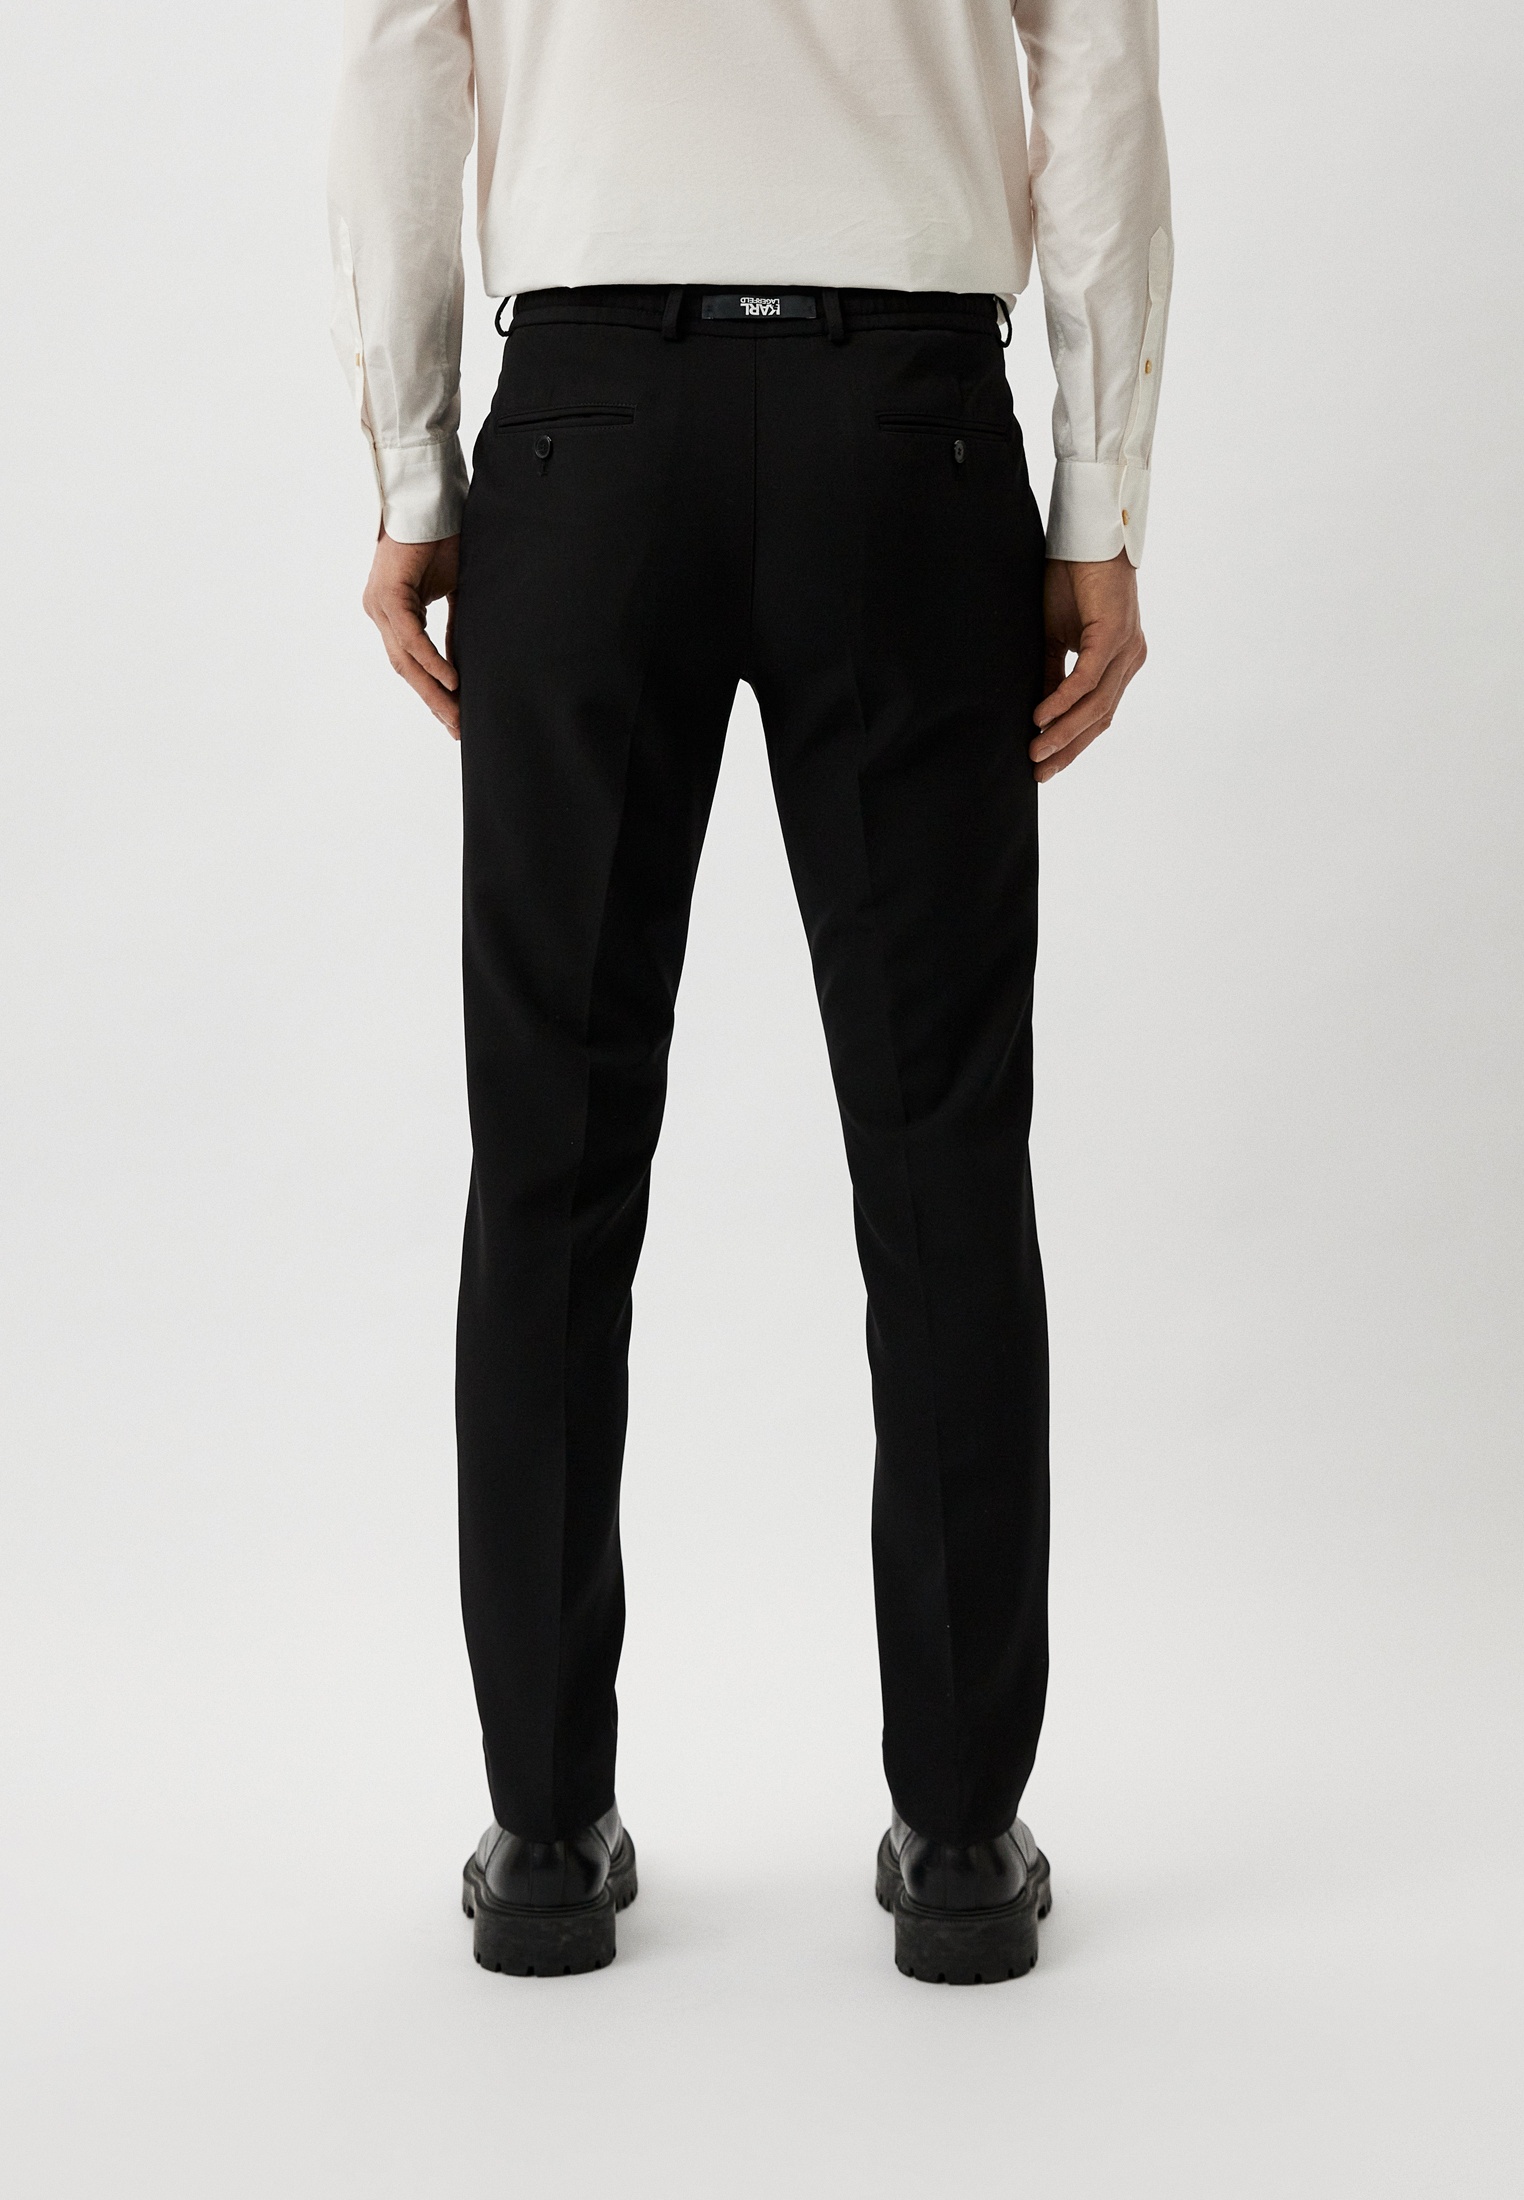 Мужские классические брюки Karl Lagerfeld (Карл Лагерфельд) 255056-541002: изображение 3